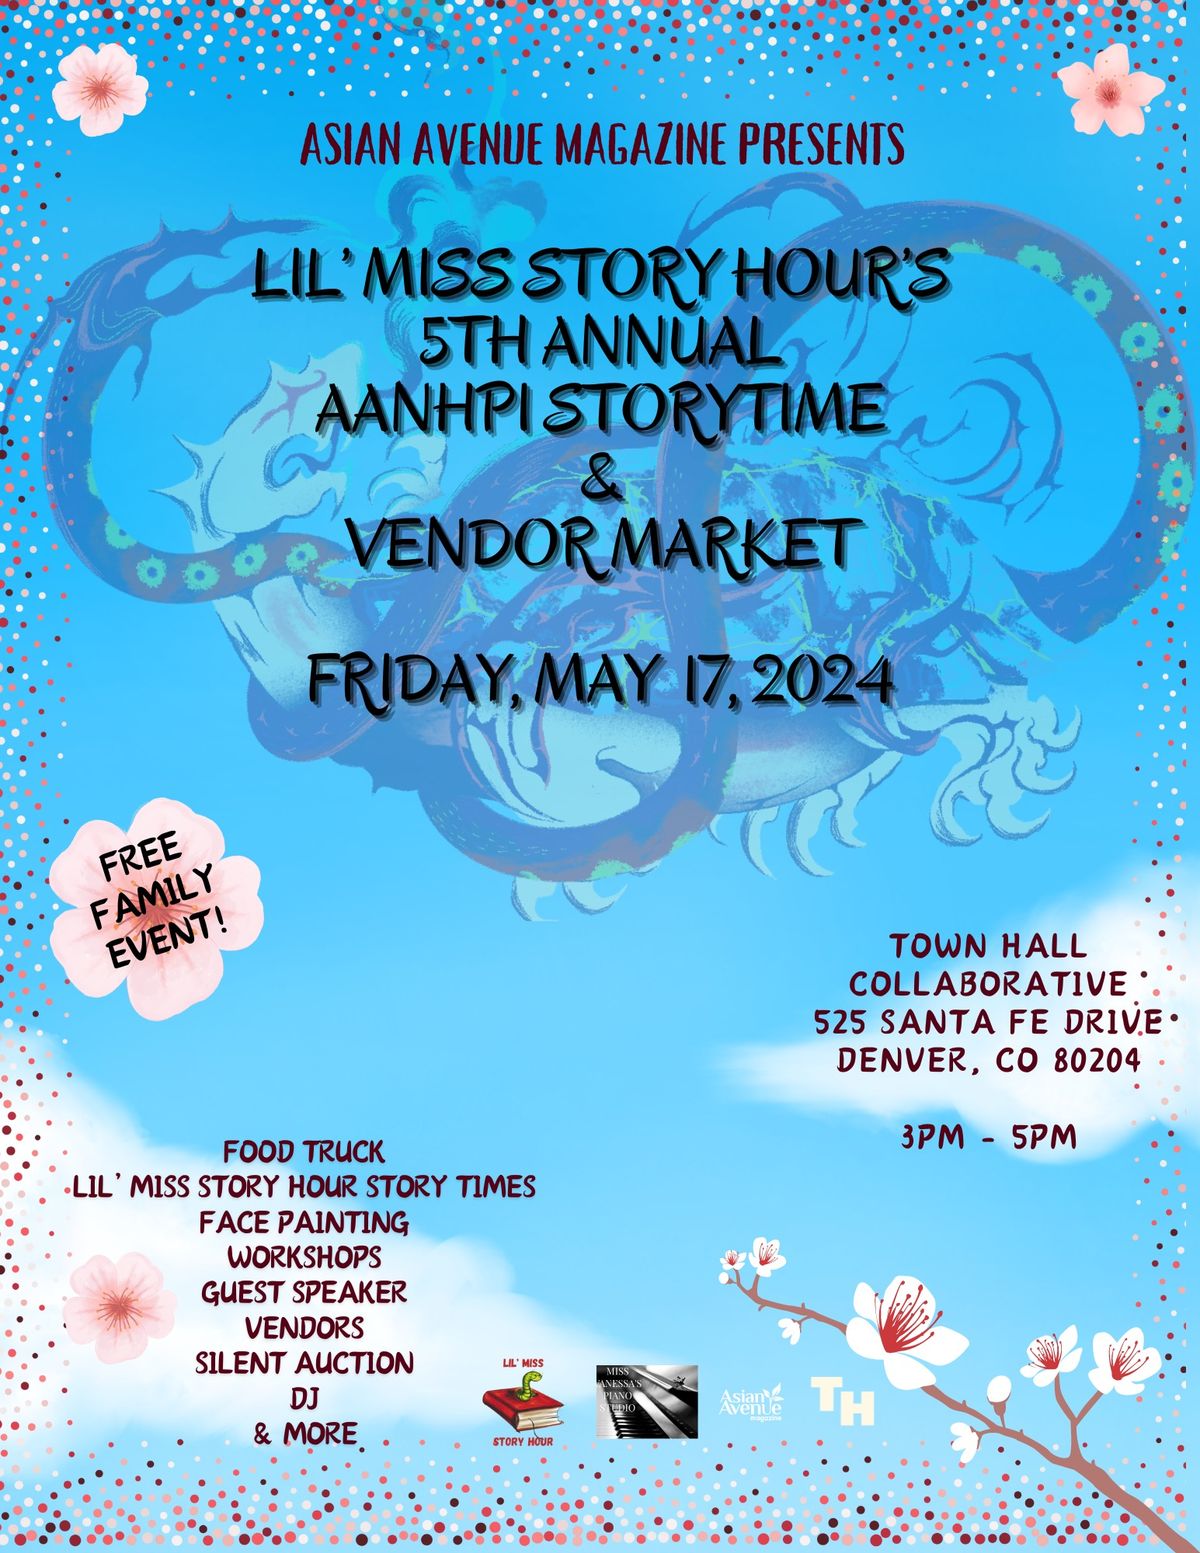 5th Annual AANHPI Storytime & Vendor Market